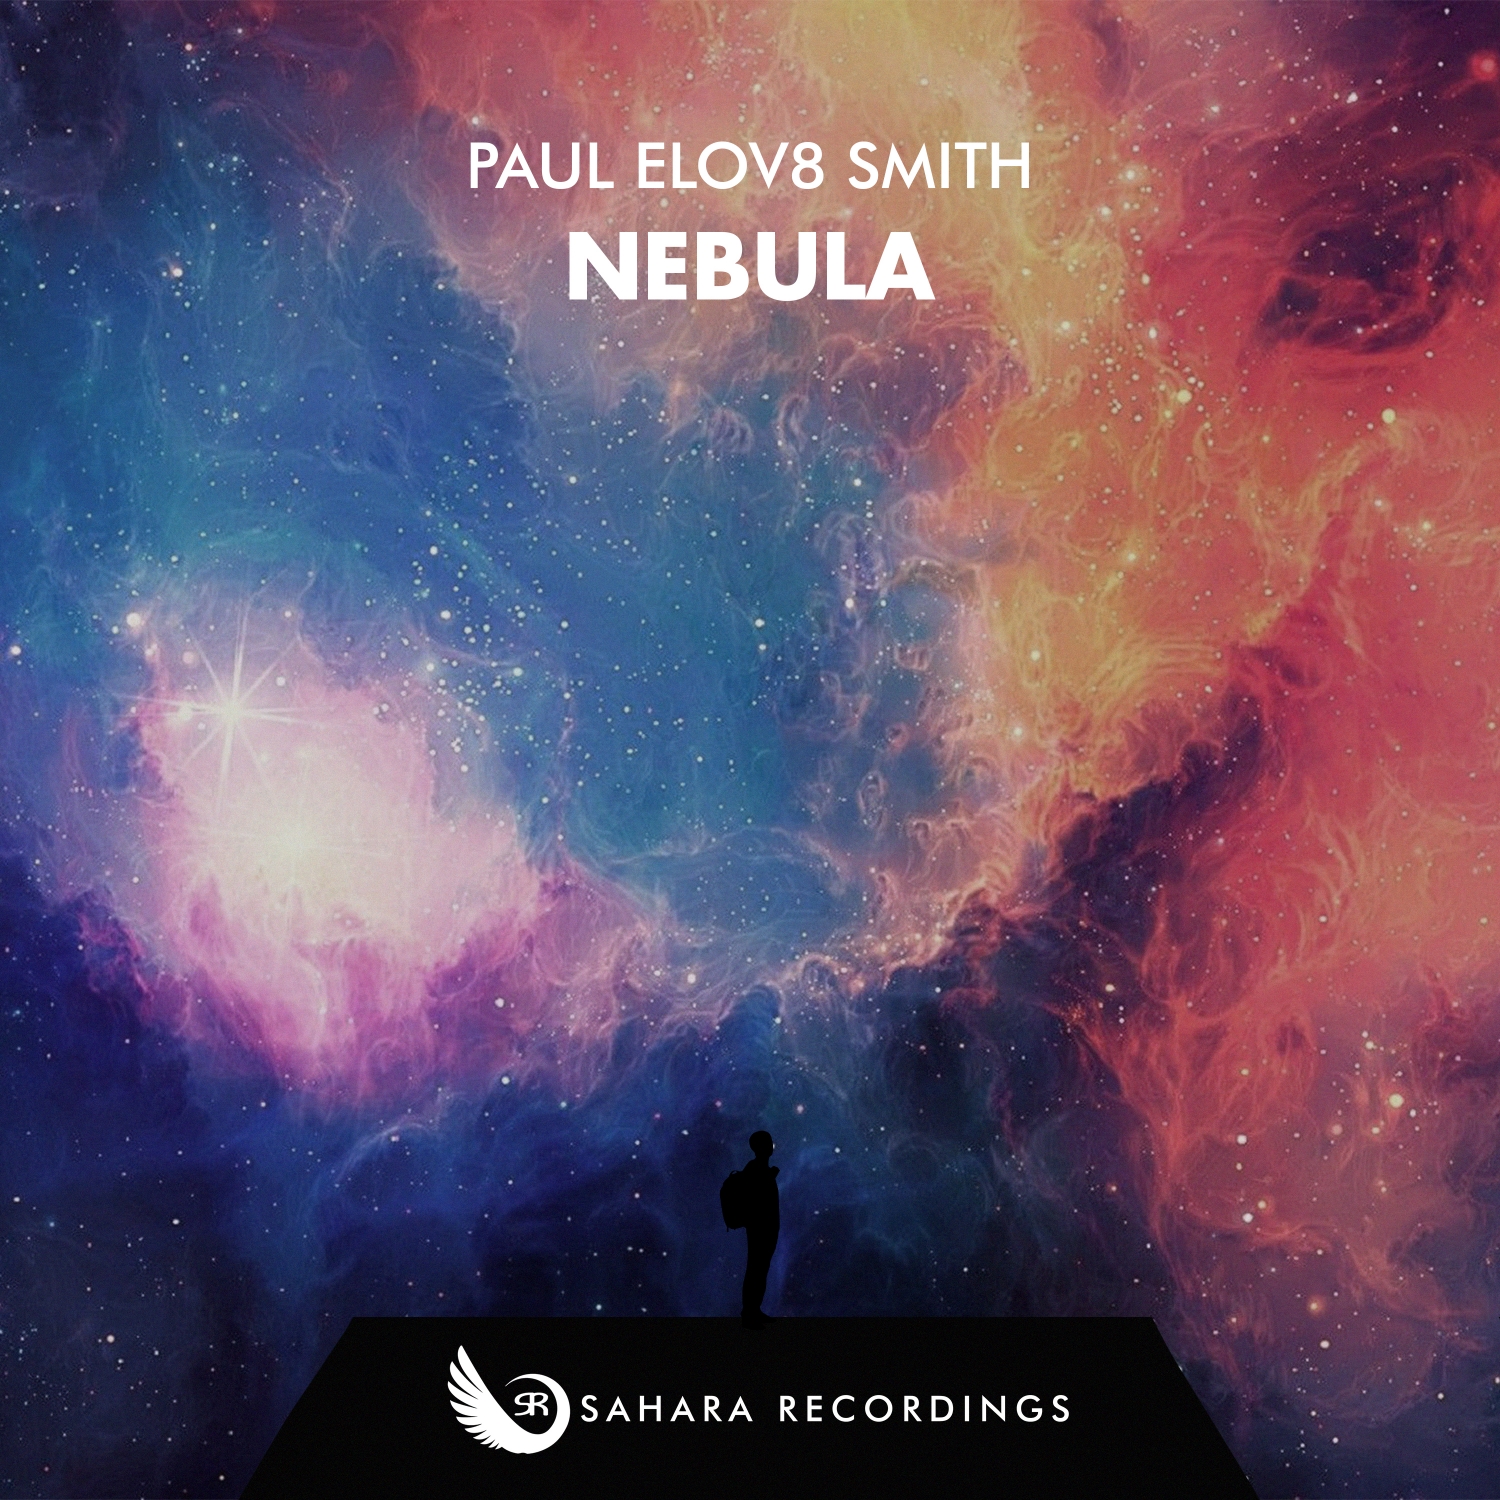 Paul elov8 Smith presents Nebula on Sahara Recordings